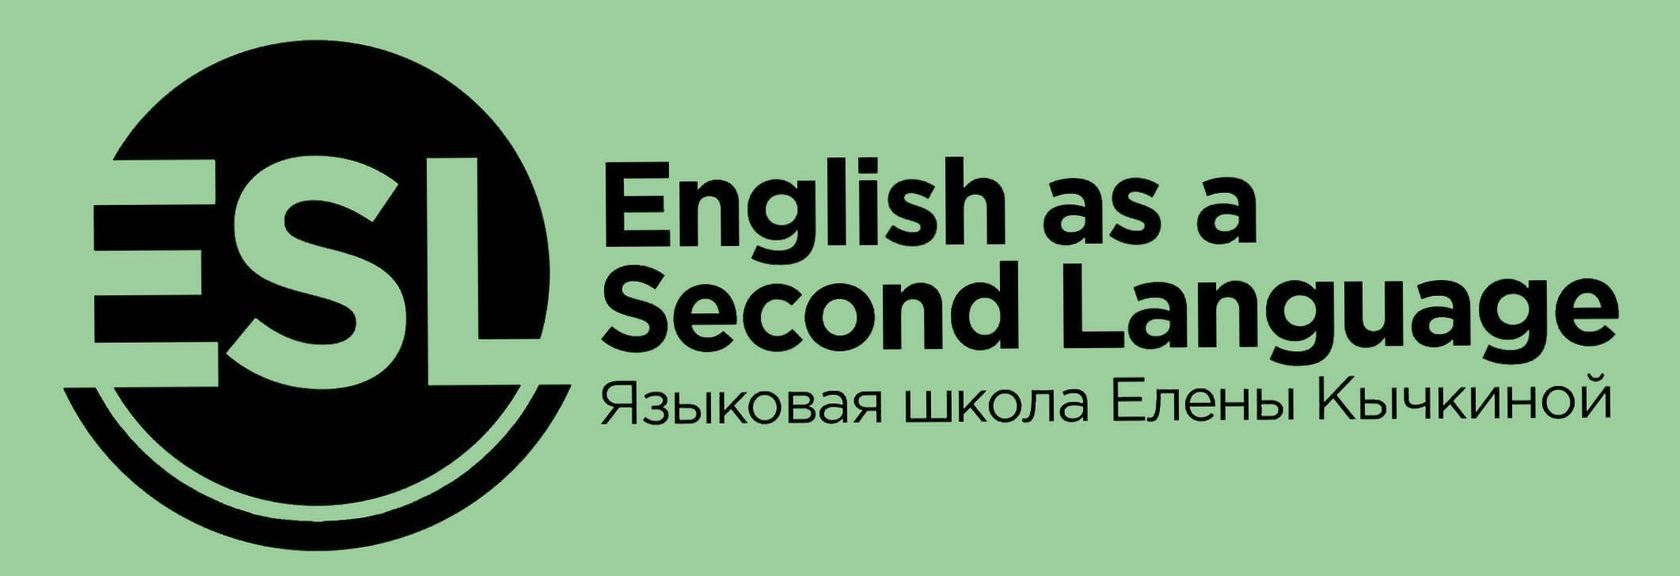 Языковая школа ESL